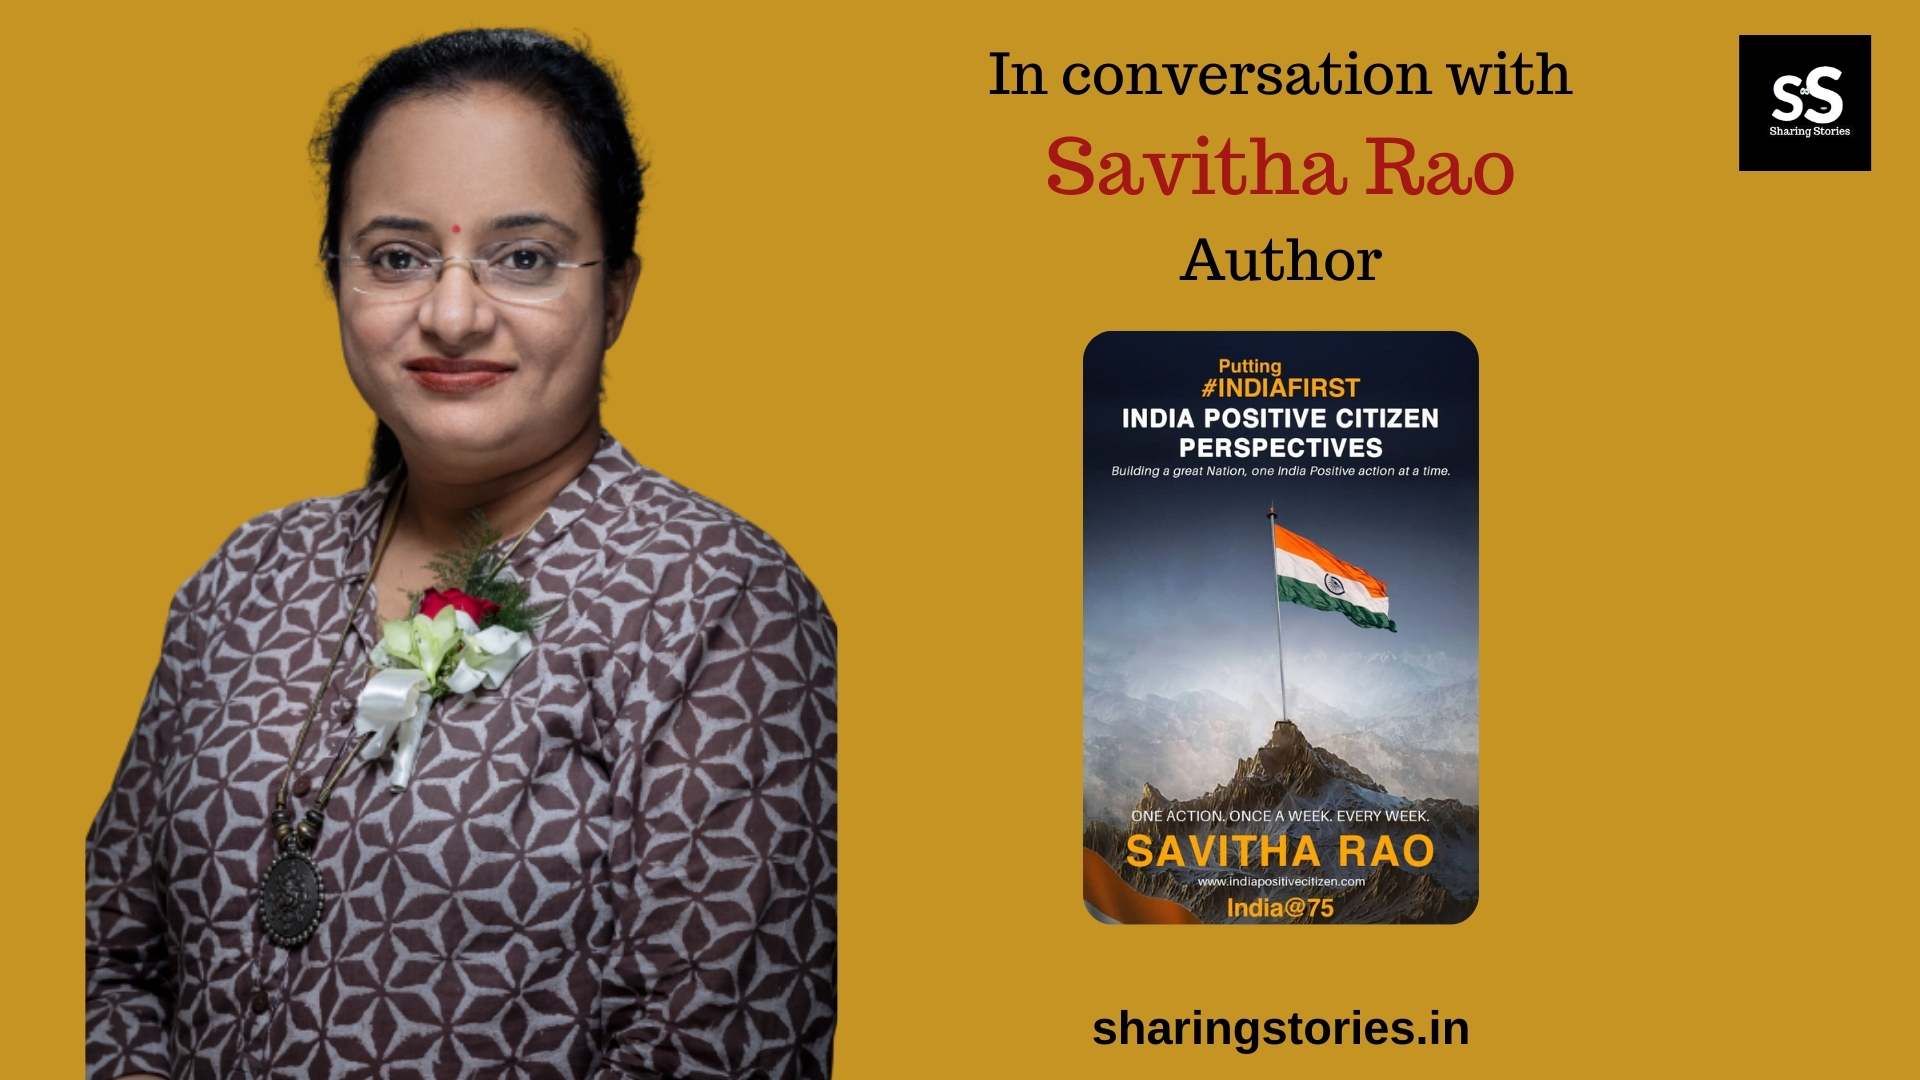 Author Savitha Rao